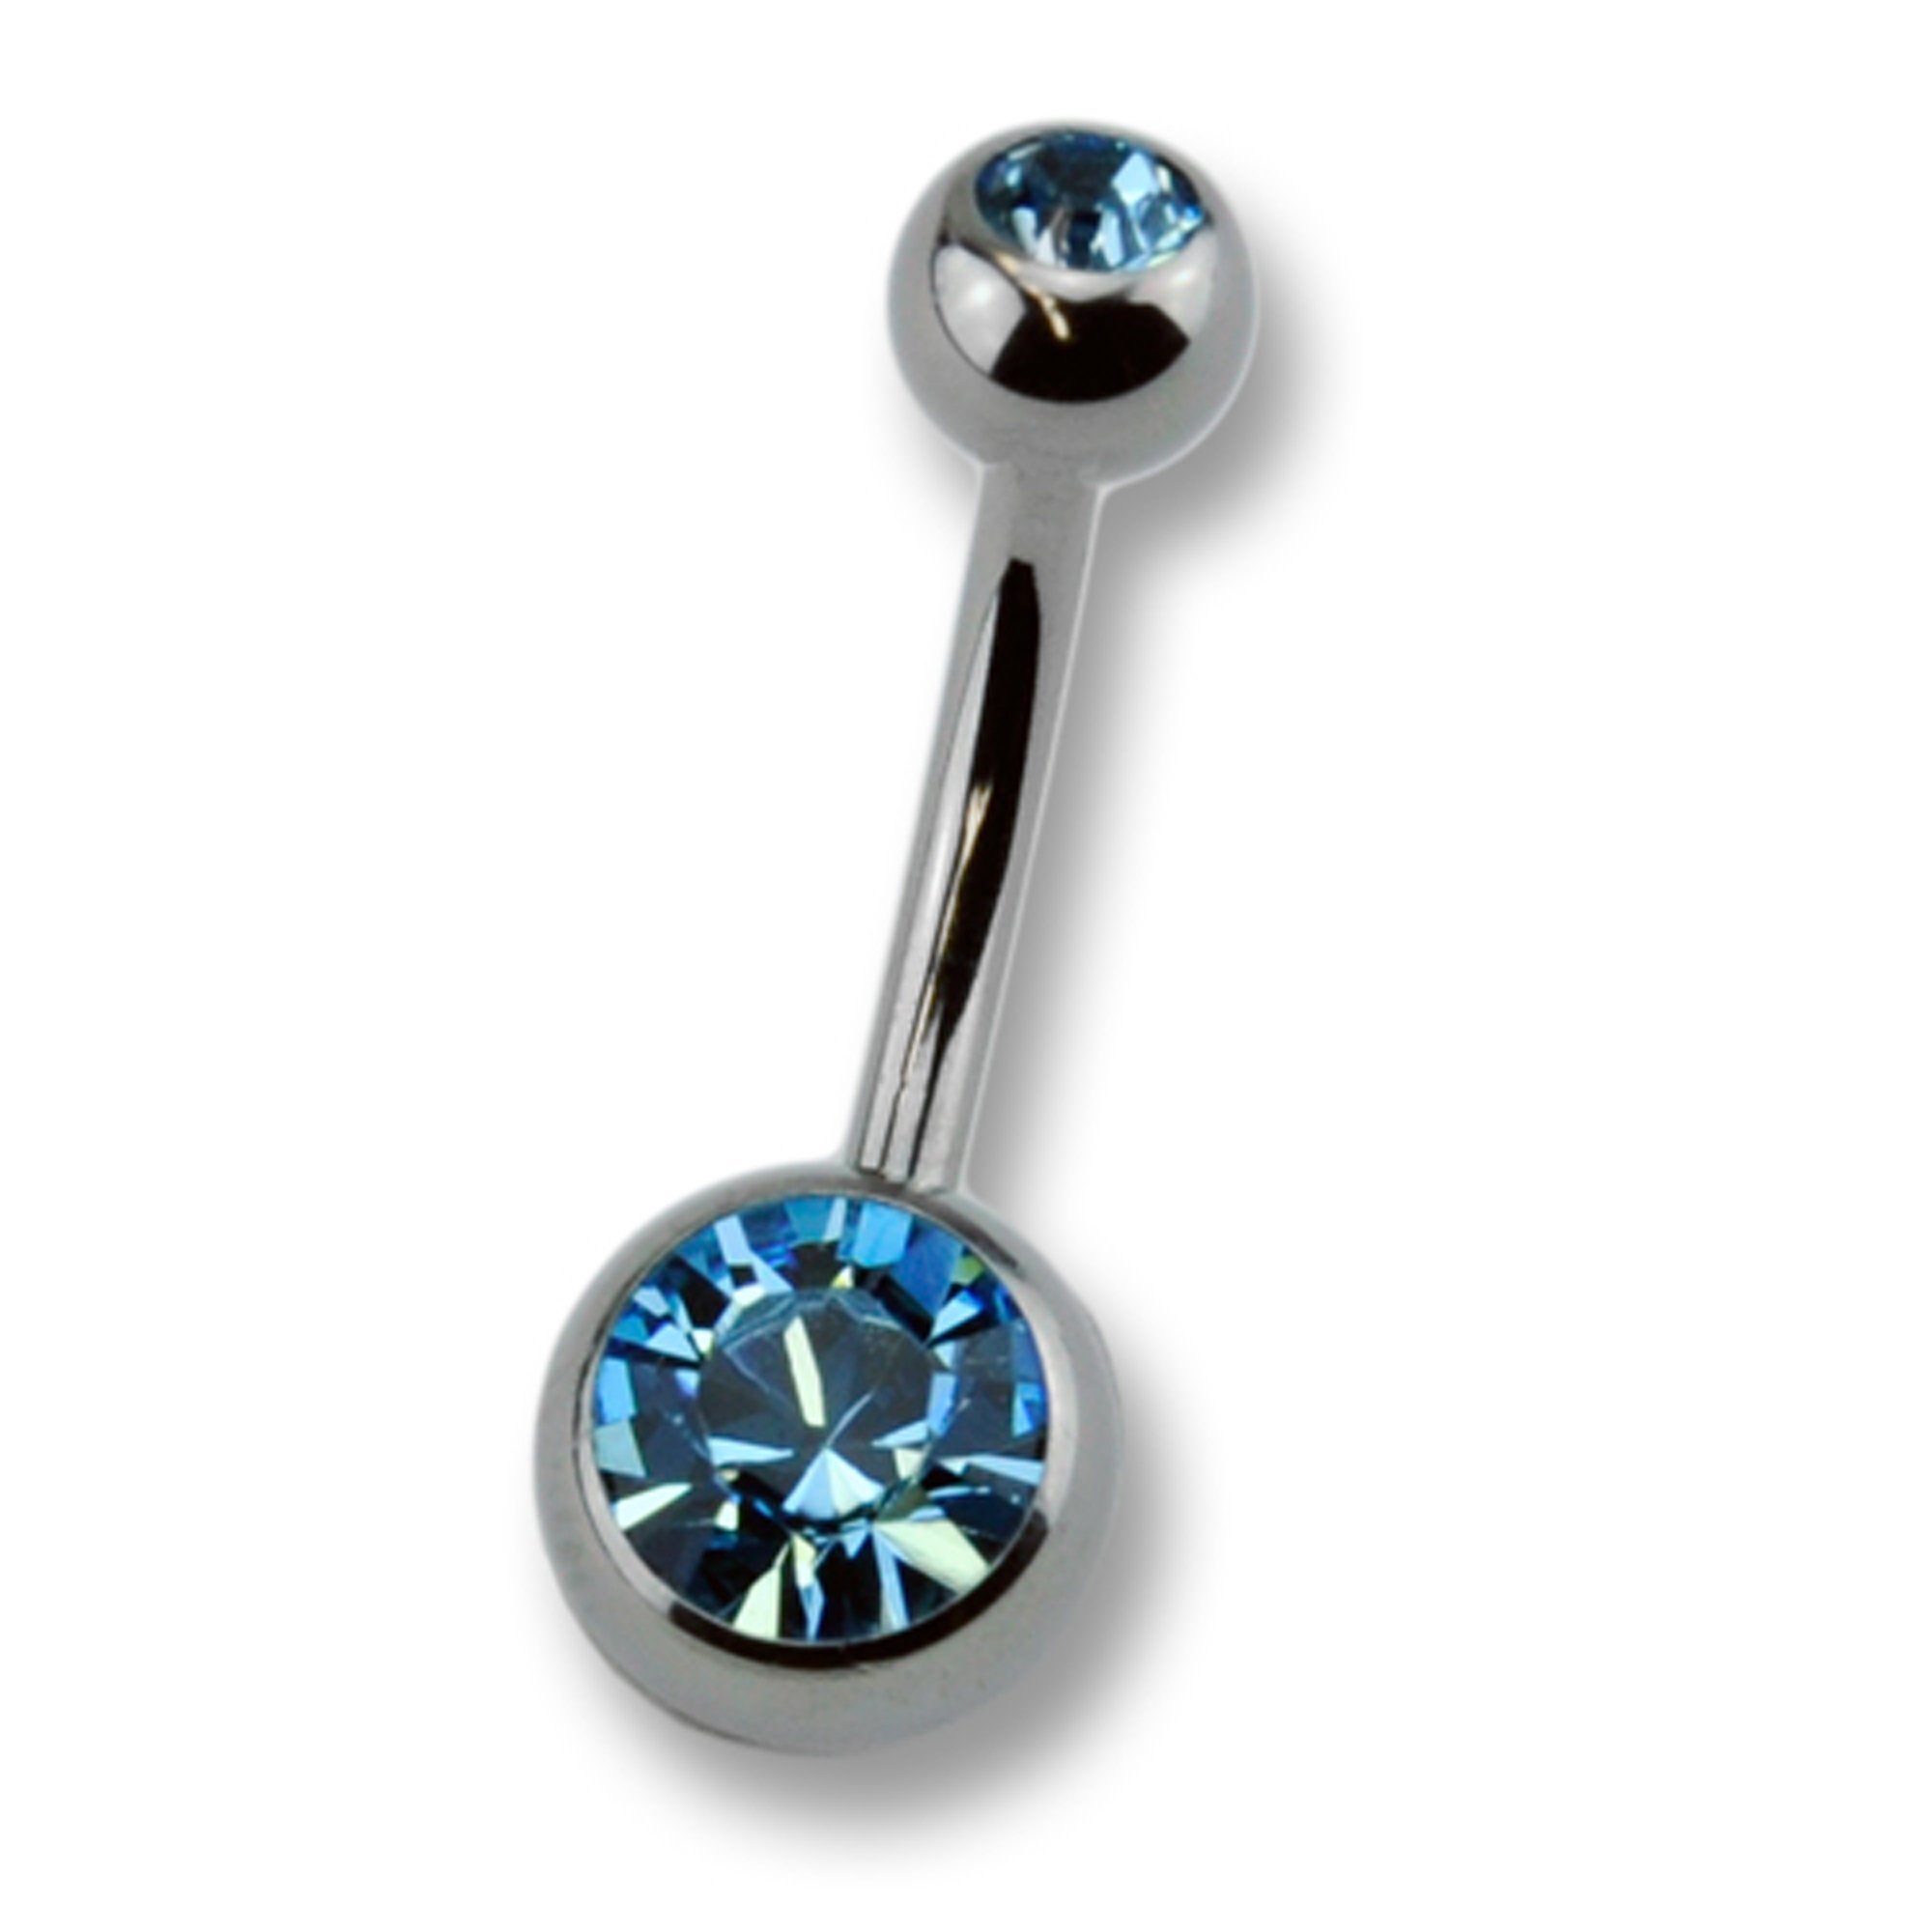 Zeeme Bauchnabelpiercing Titan silberfarben Kristall dunkelblau | Bauchnabelpiercings